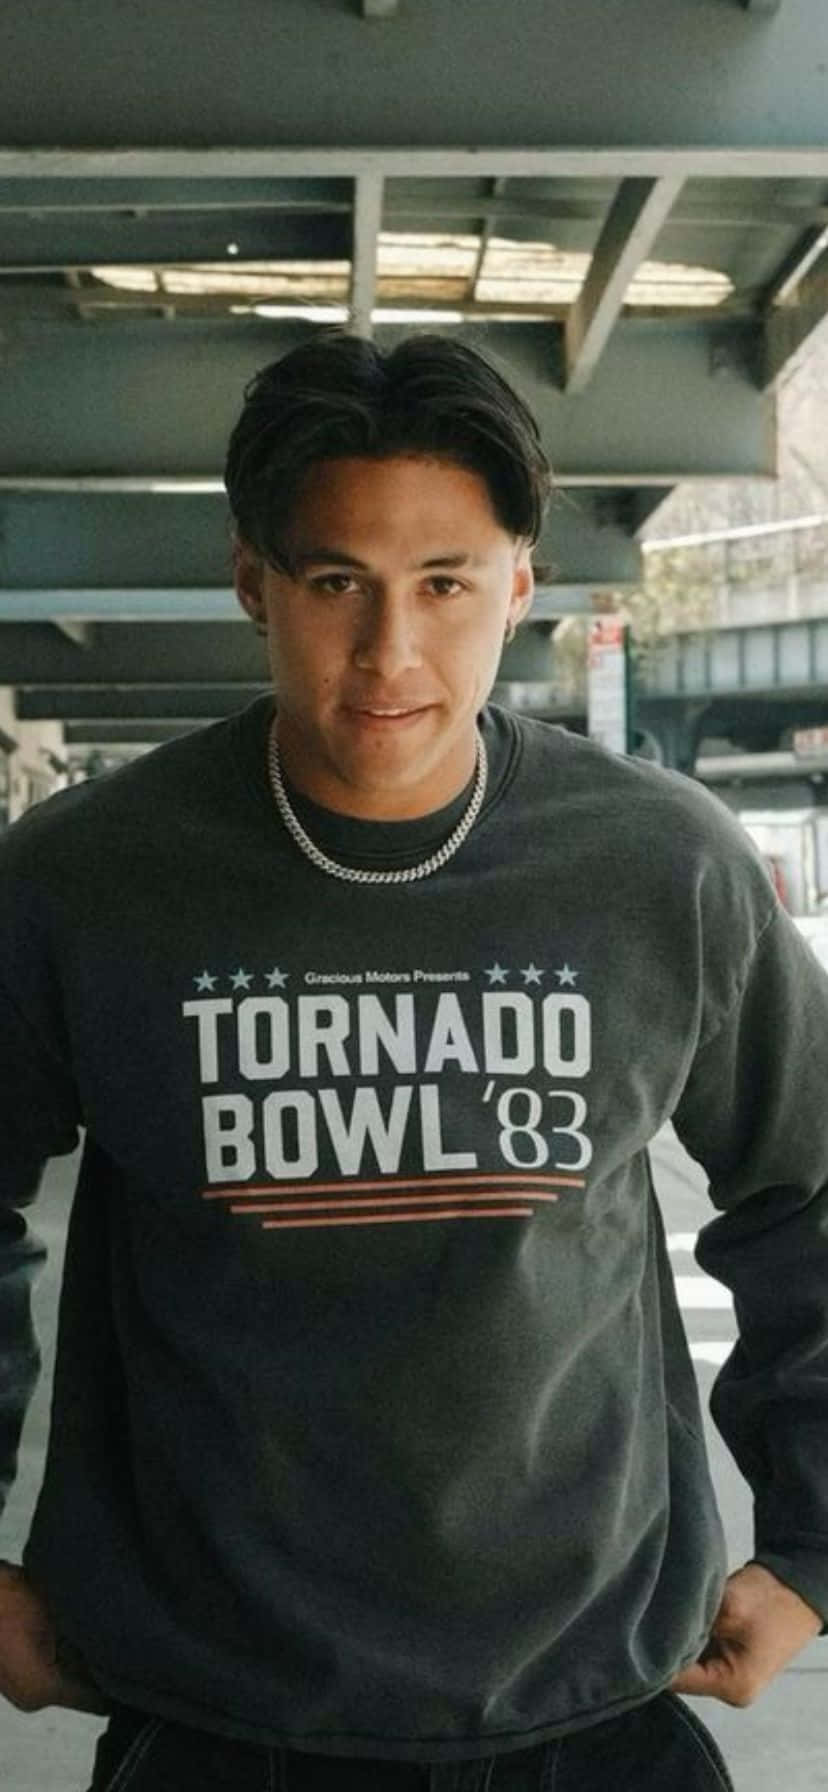 Manin Tornado Bowl Sweatshirt Wallpaper